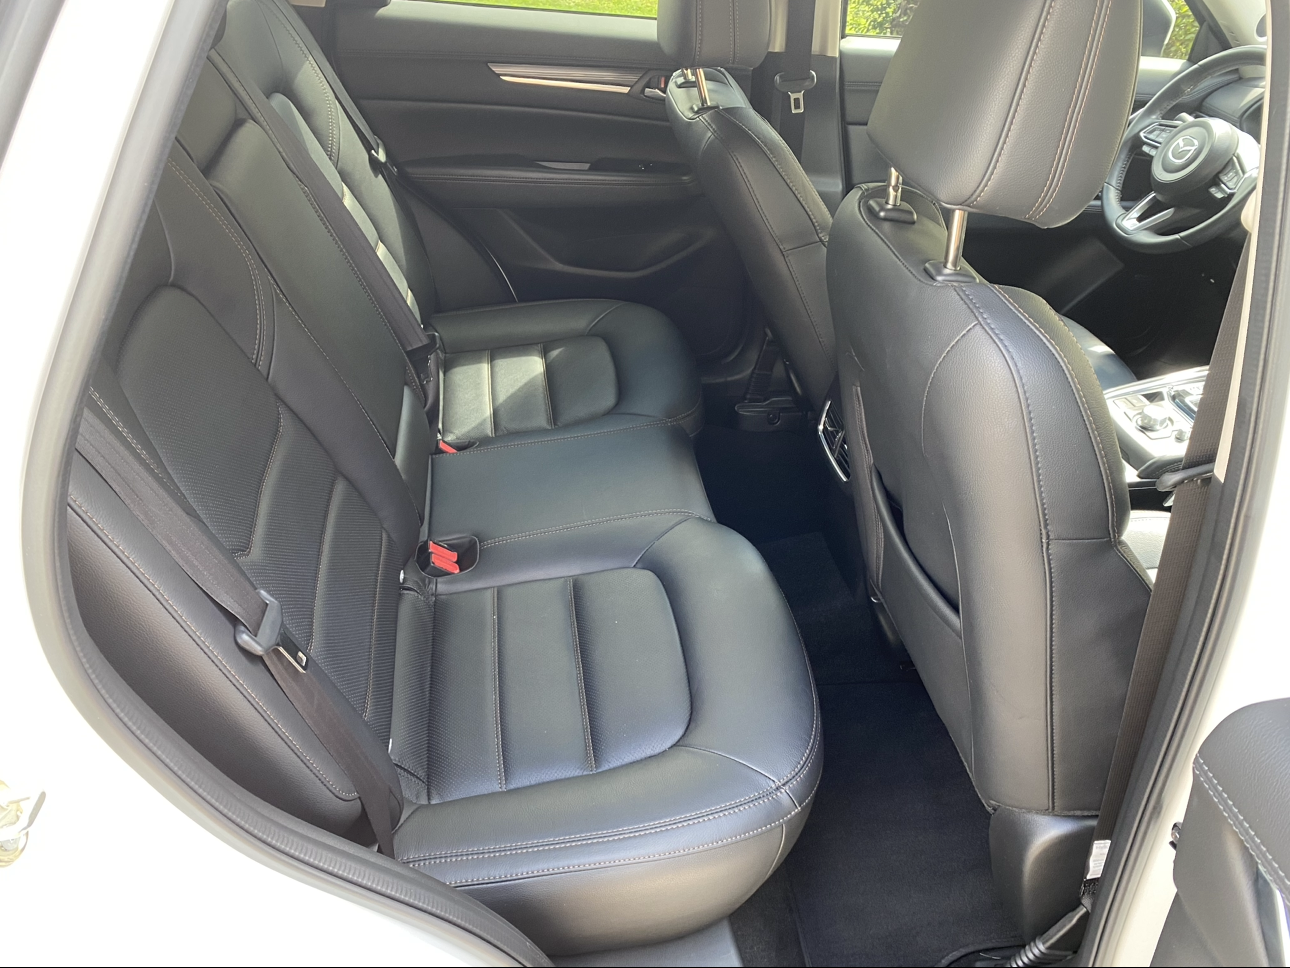 Mazda SUV Basic Interior